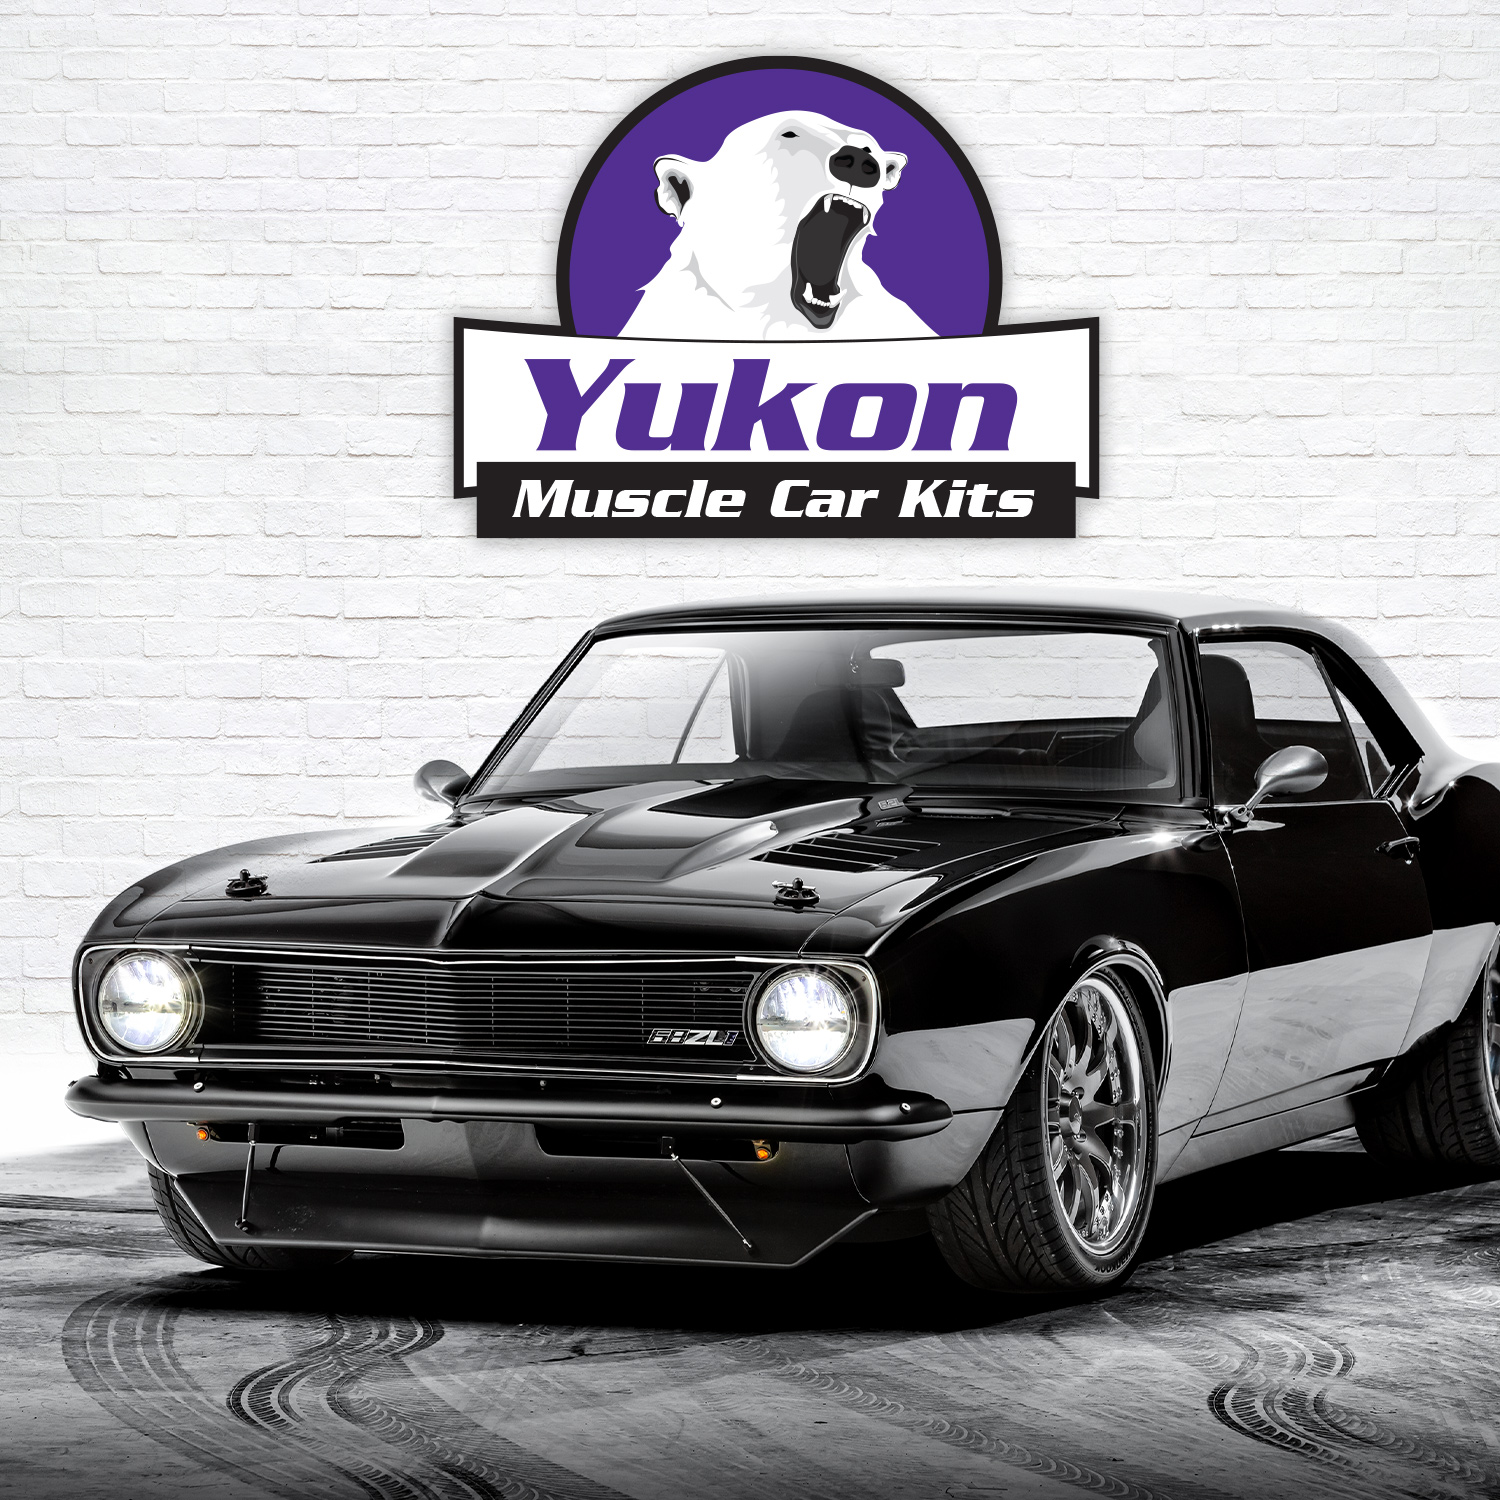 Yukon Muscle Car Limited Slip & Re-Gear Kit, Chrysler 8.75”, 29 spln, 3.73 ratio